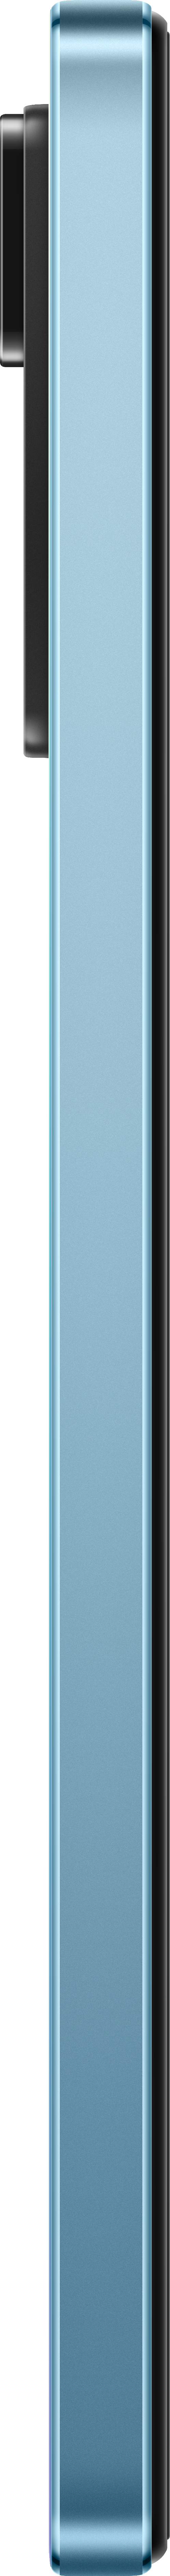 XIAOMI Redmi Note 11 Pro Dual Blue GB SIM Star 128